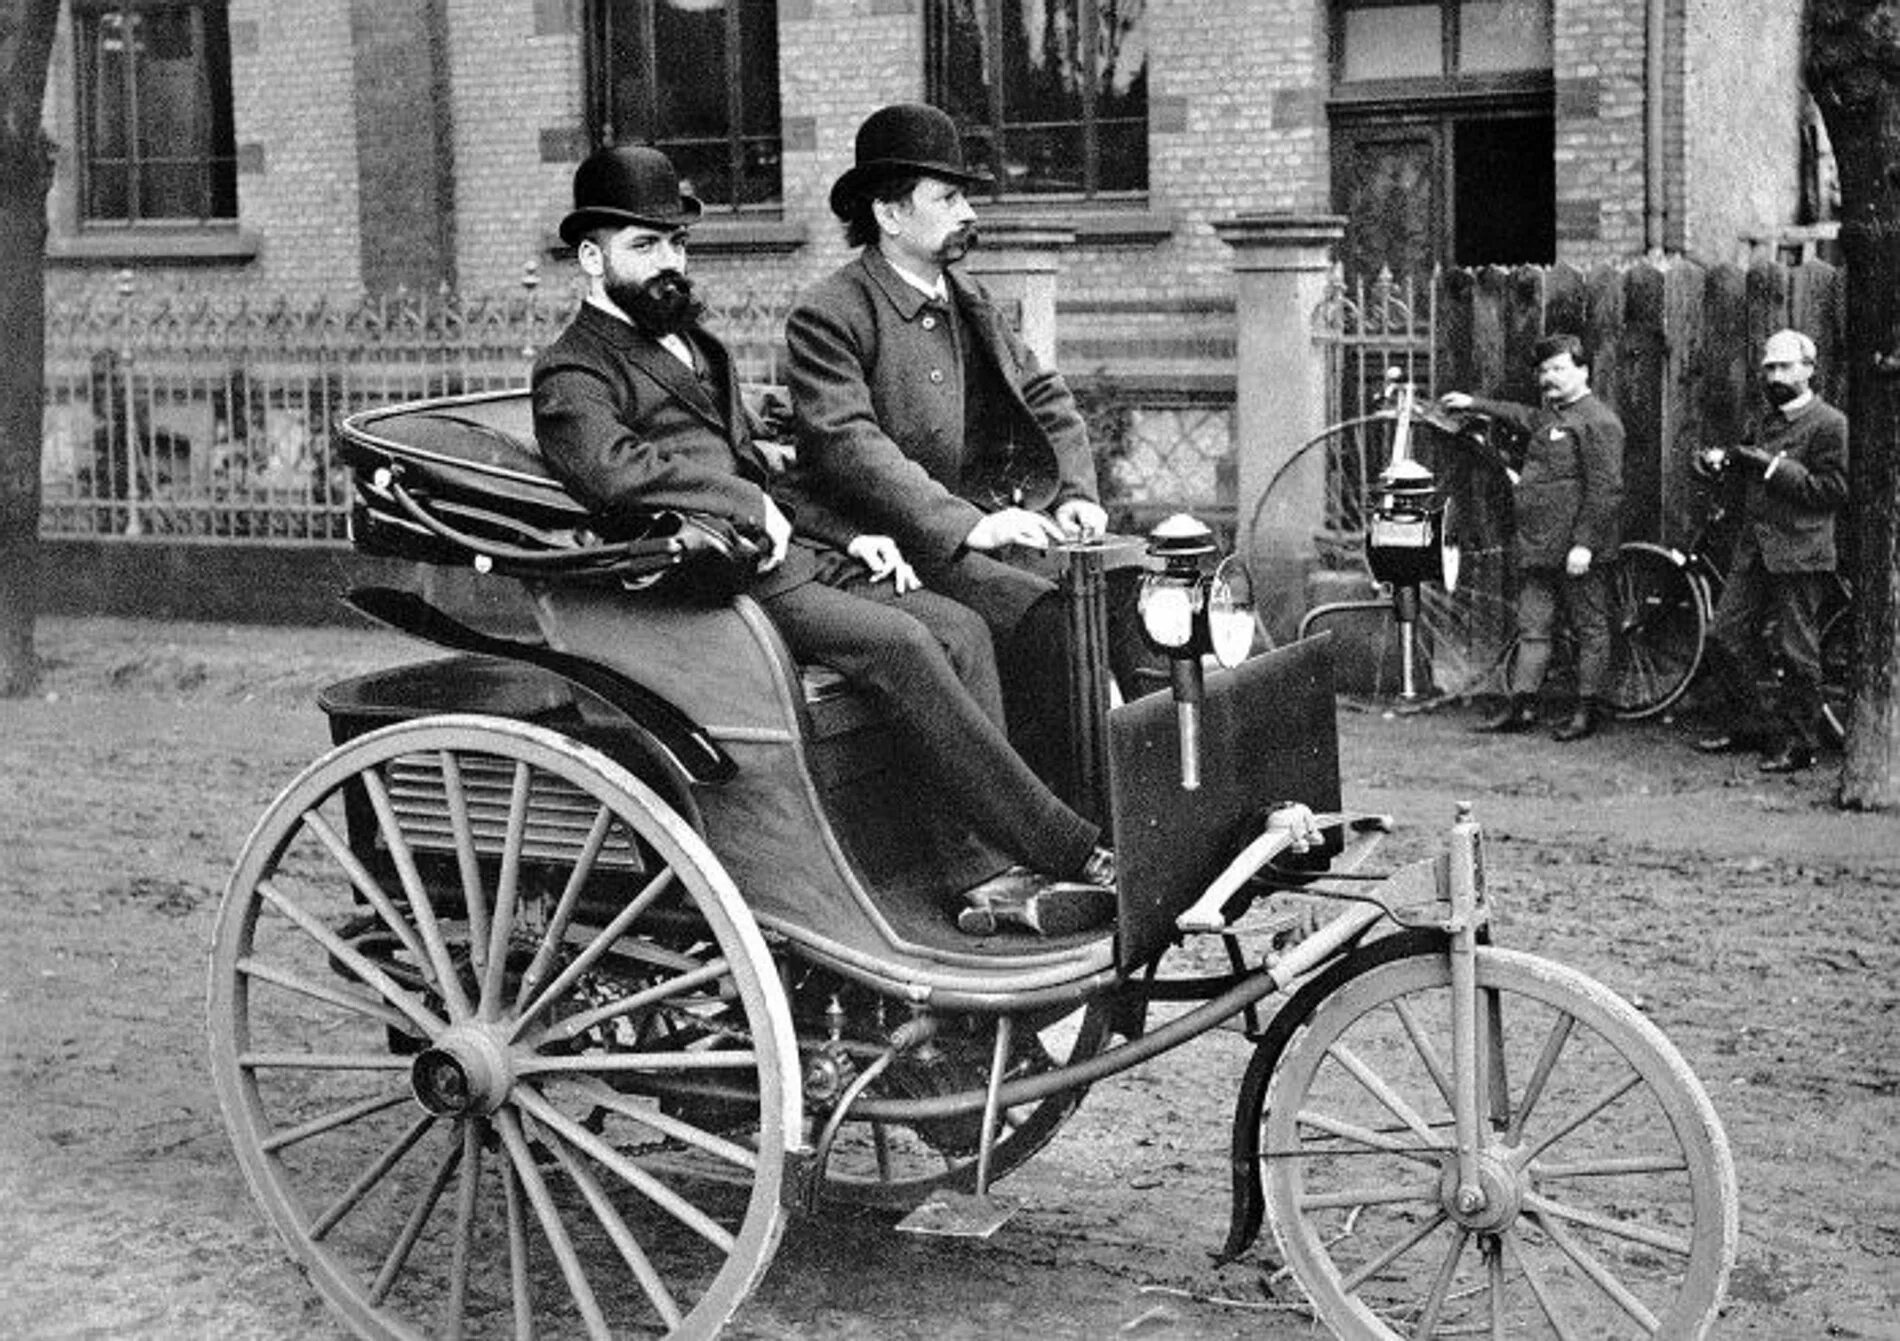 Benz Patent-Motorwagen 1886. Самобеглая коляска